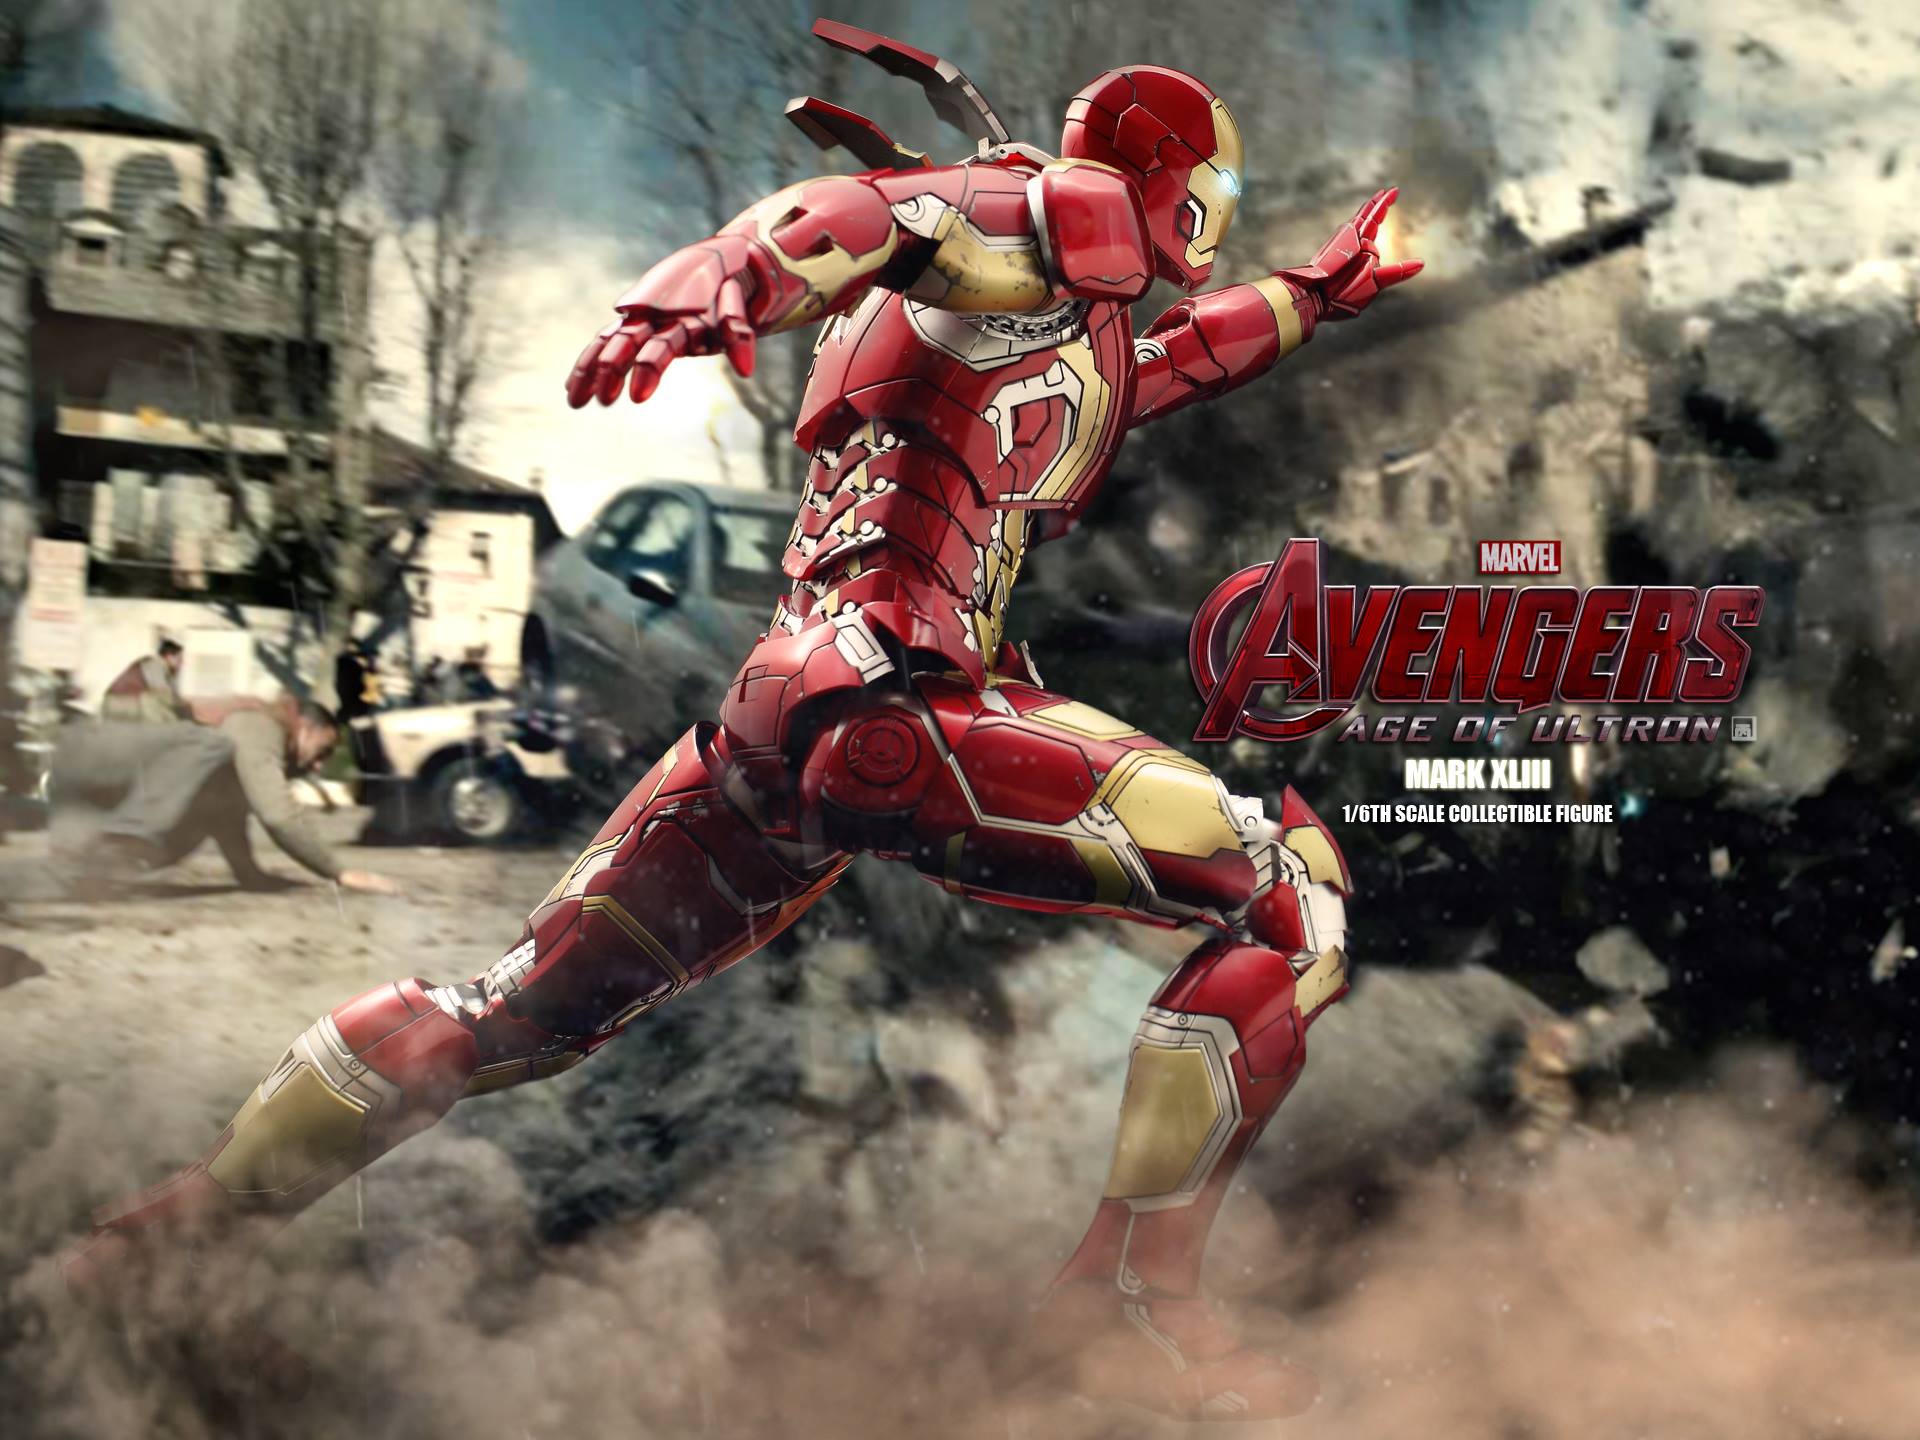 Hot Toys Reveals Avengers: Age of Ultron's Iron Man Mark XLIII